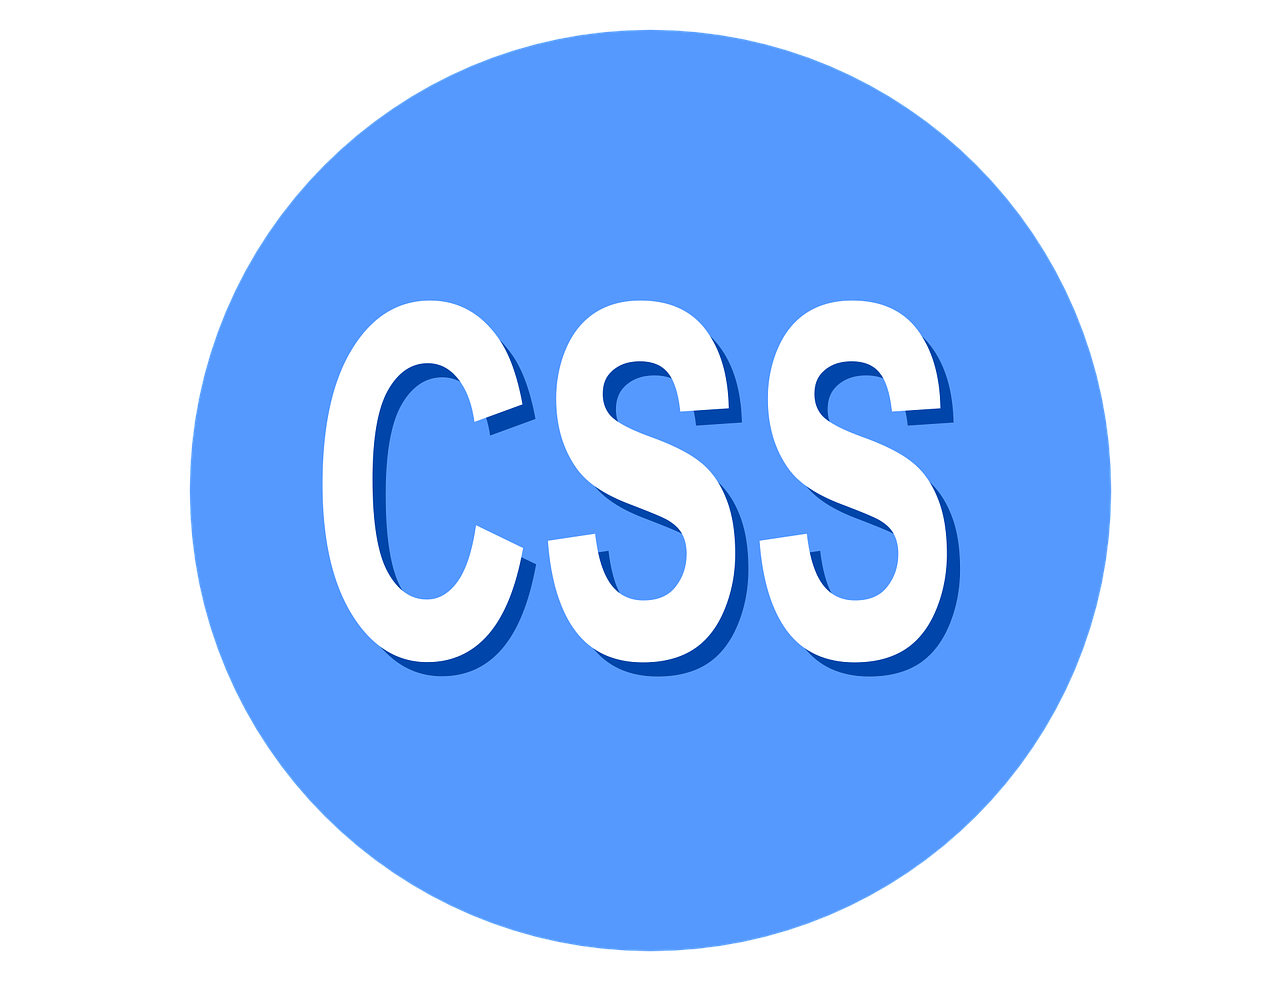 Css style images. Значок CSS. CSS логотип. Значок CSS PNG. Язык CSS.